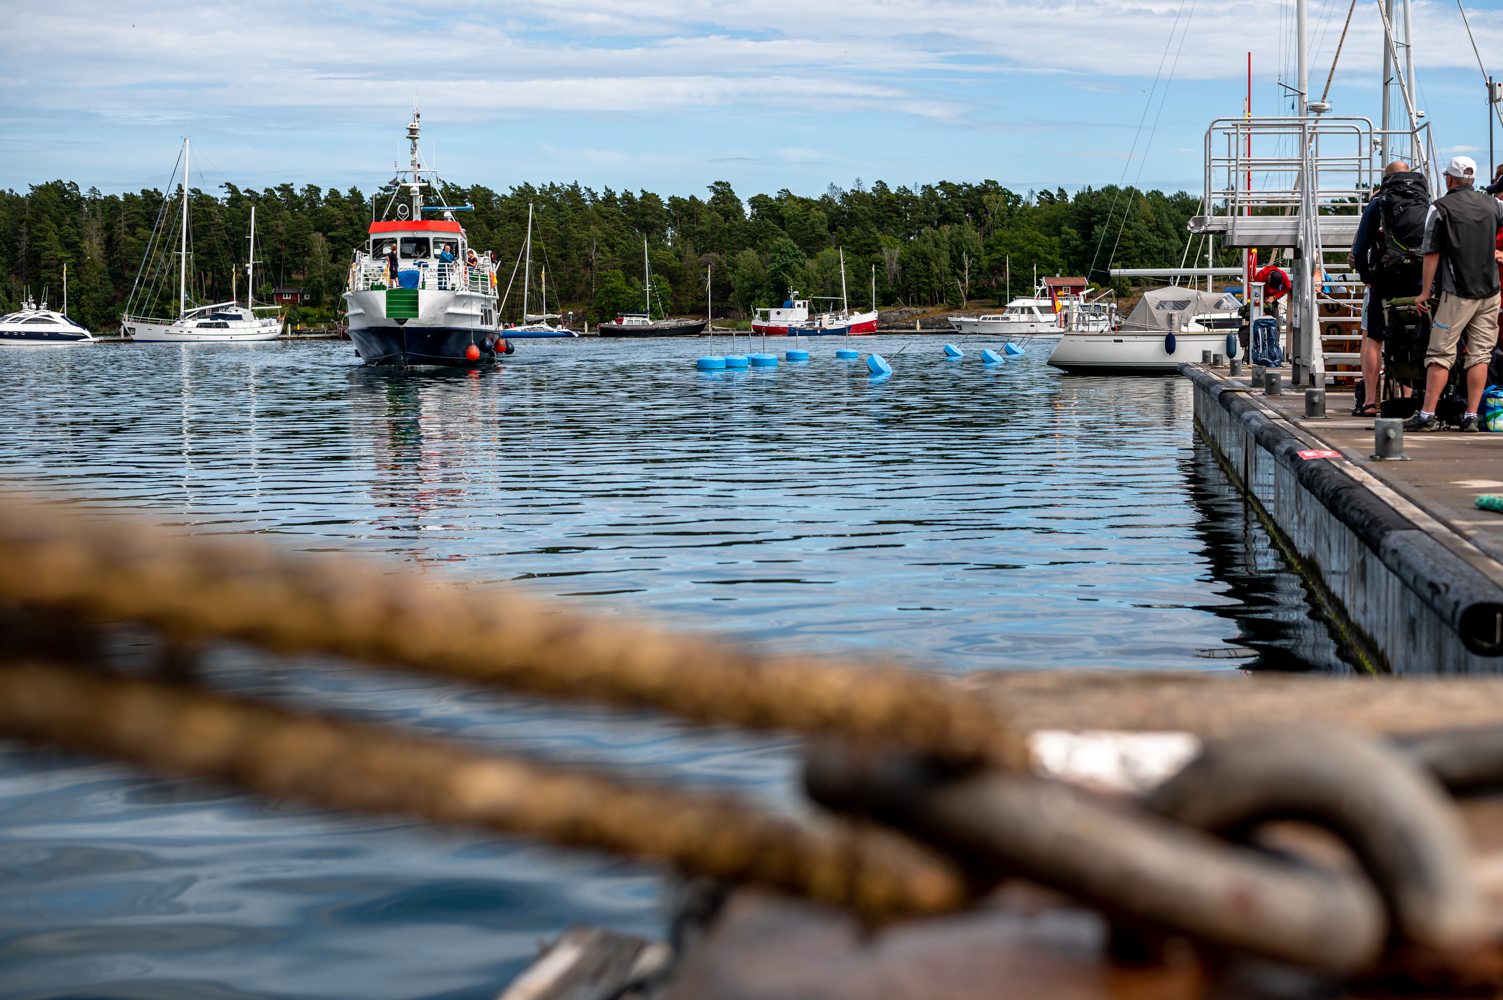 A ferry approaching Nynäshamn harbour